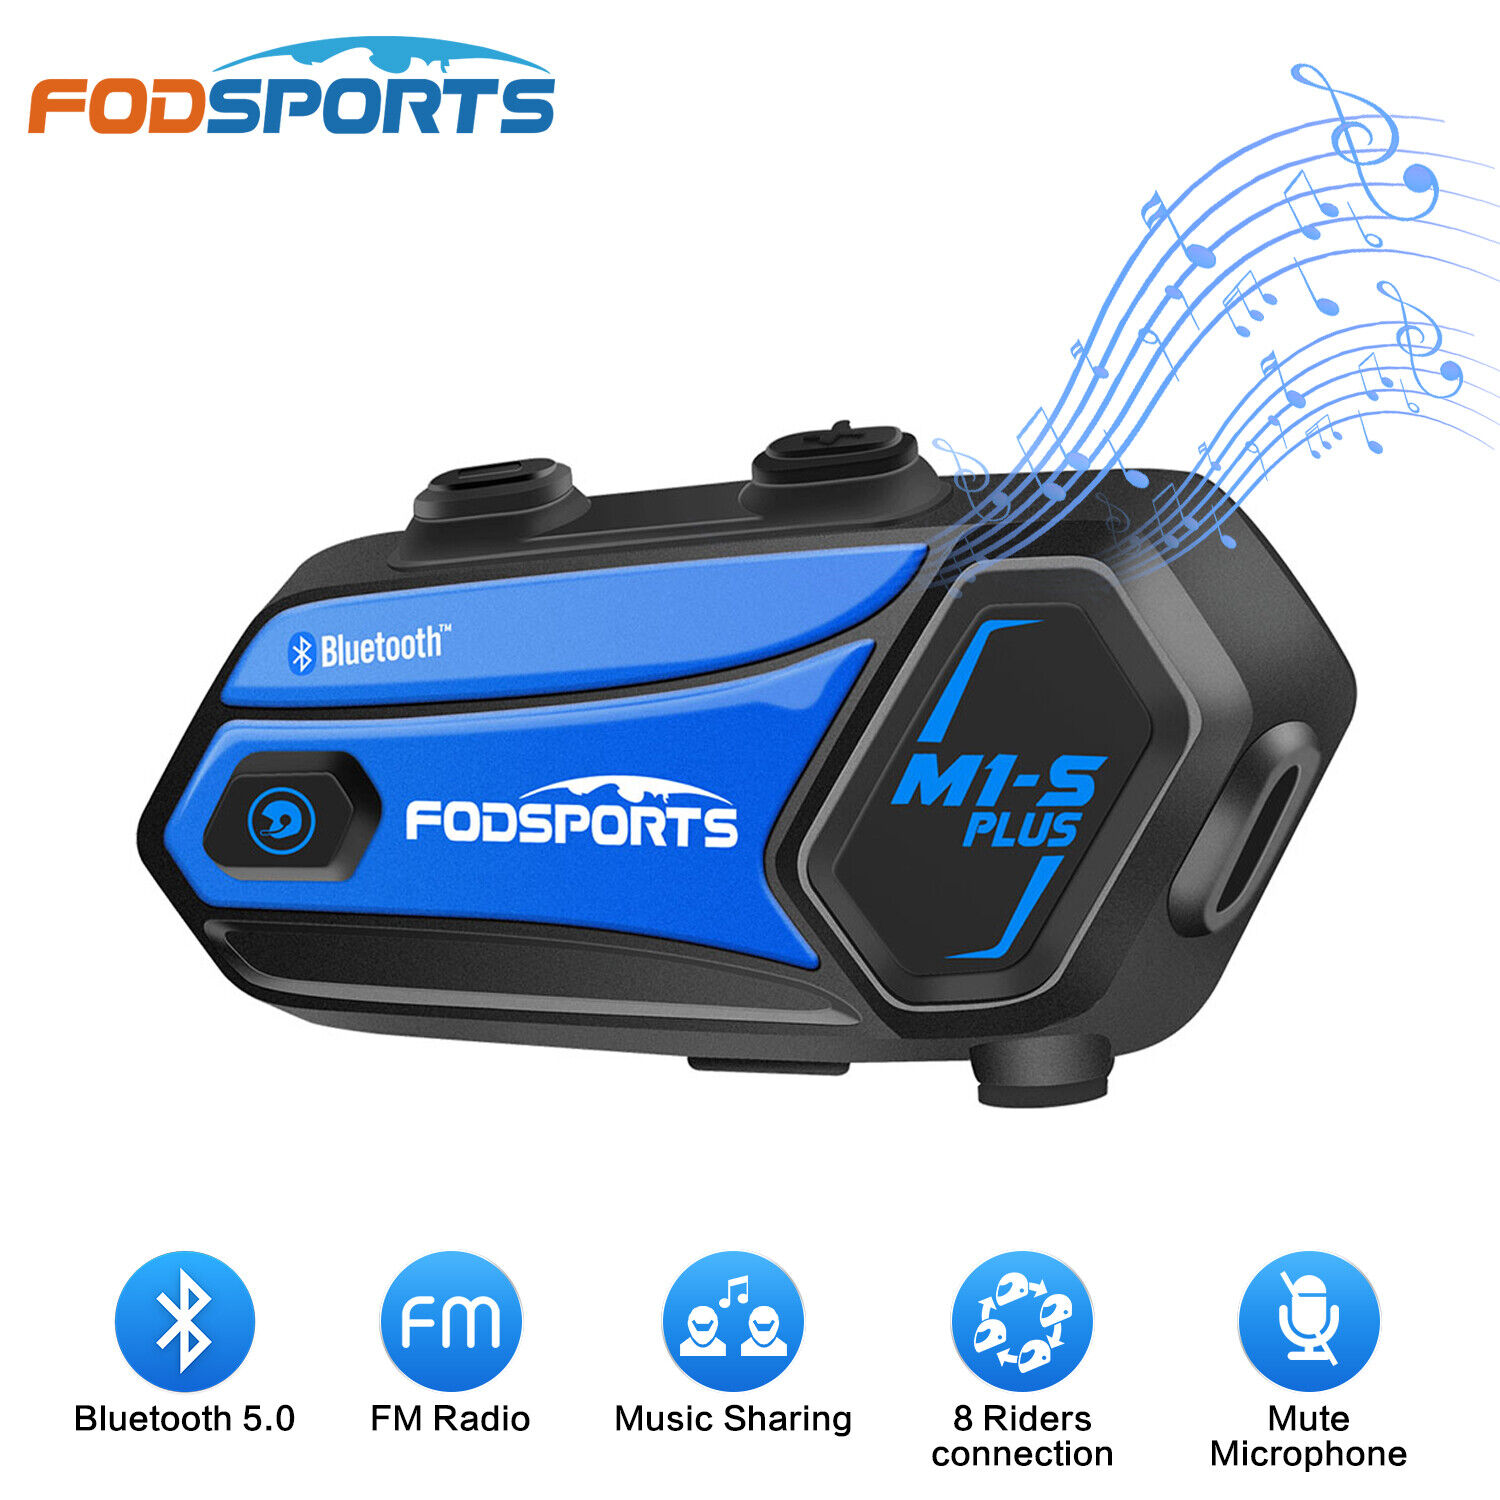 Fodsports M1-s Plus Motorcycle Helmet Intercom Bt Headset Interphone Music Share